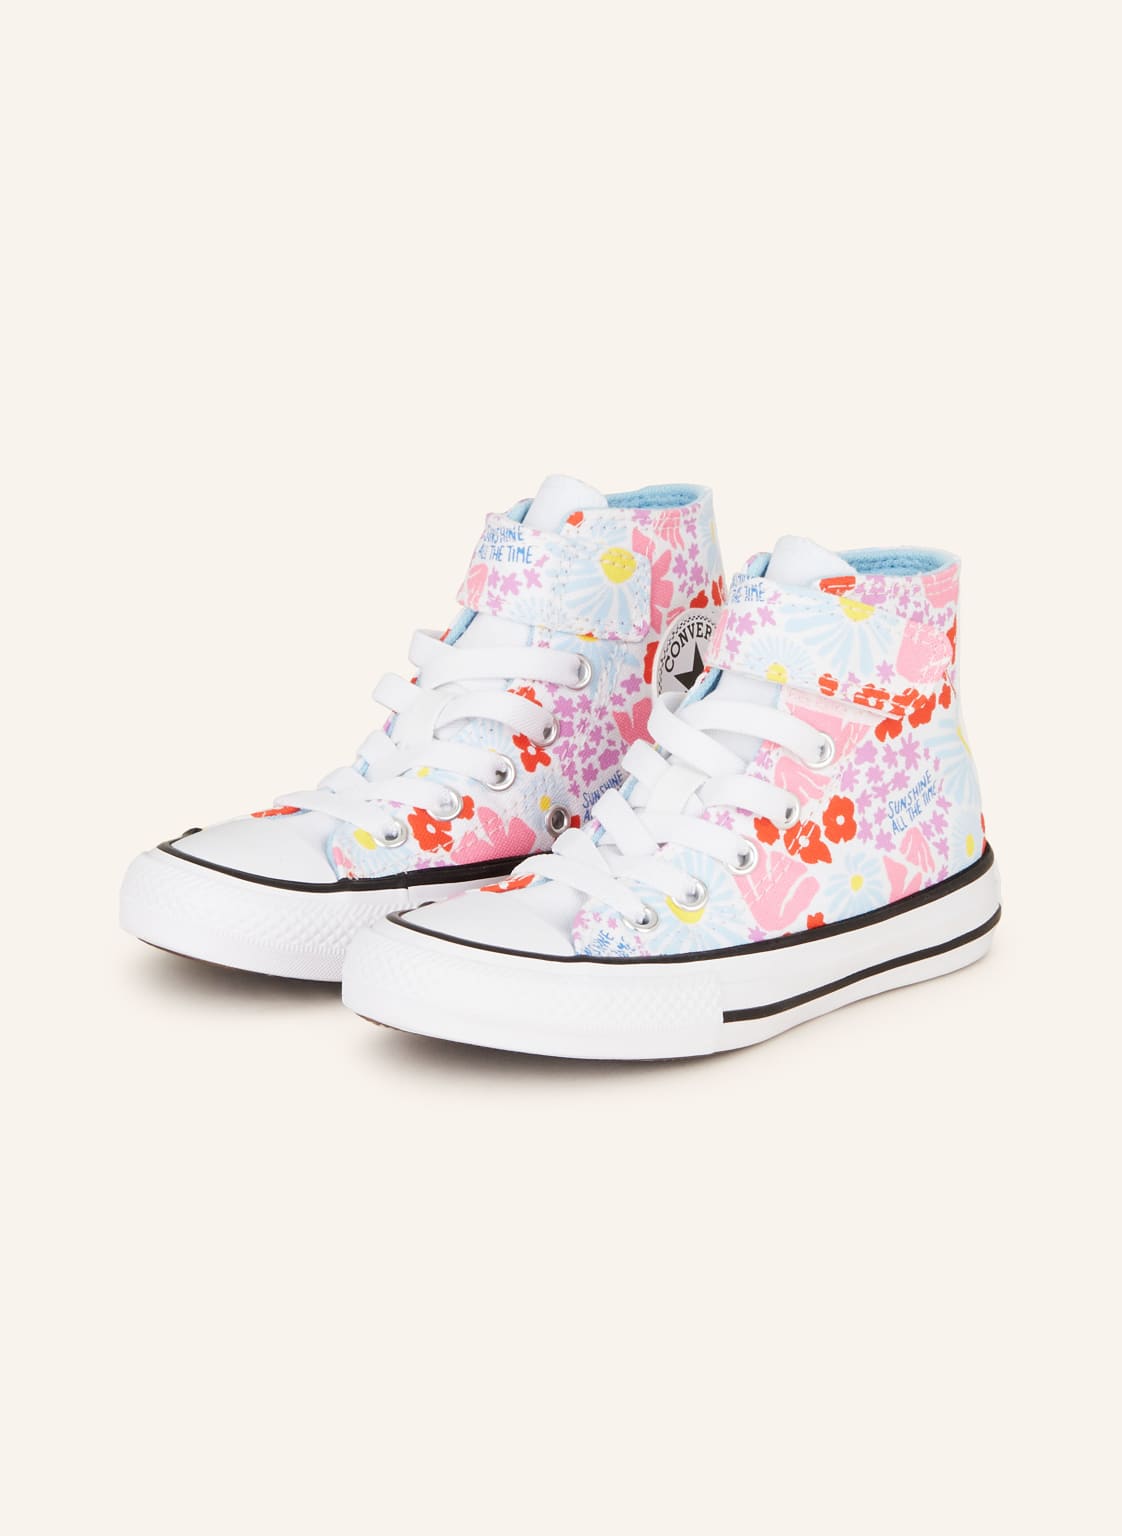 Converse Hightop-Sneaker Easy On Floral weiss von Converse